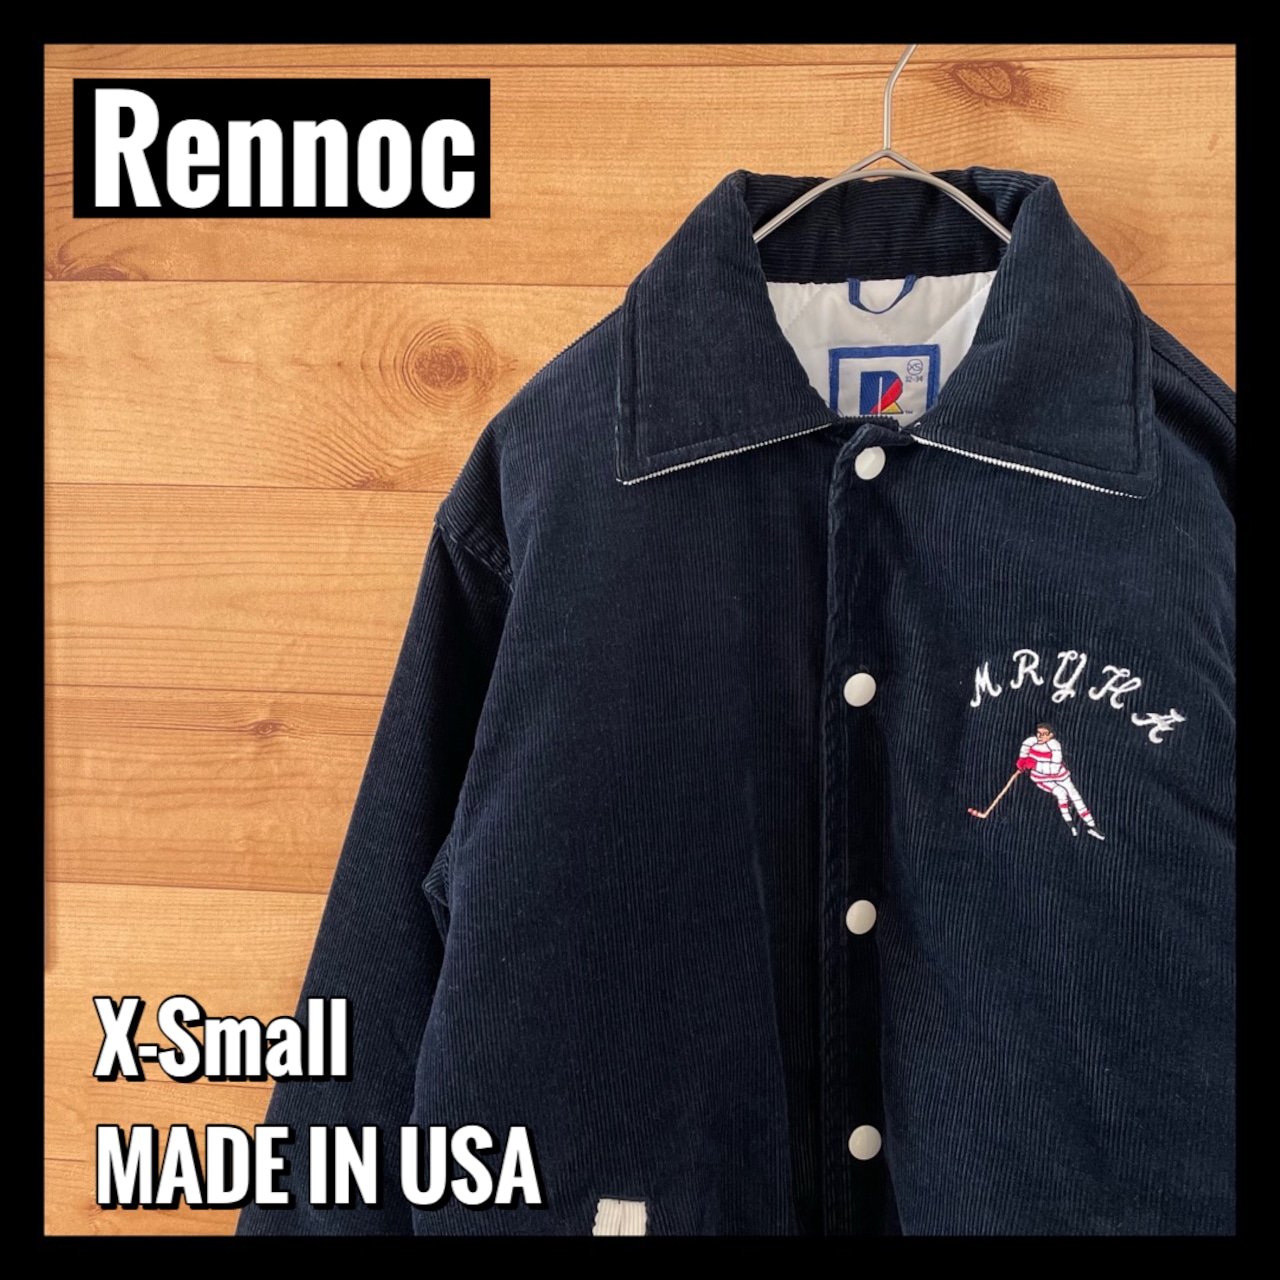 【Rennoc】USA製 レノック コーデュロイ スタジャン アイスホッケー アワードジャケット ワンポイント 刺繍ロゴ アメリカ古着